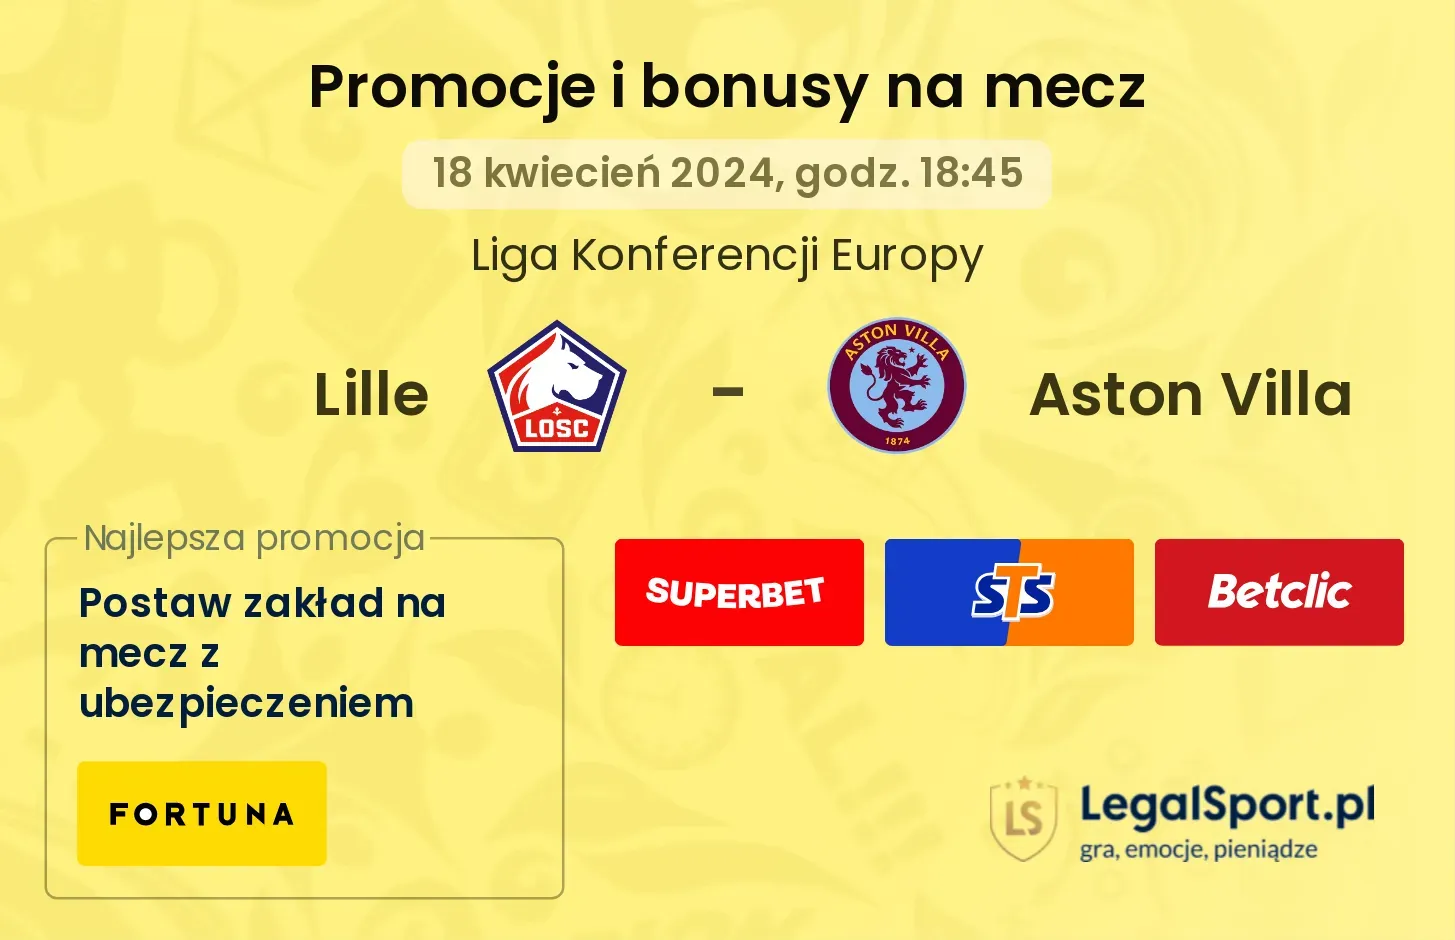 Lille - Aston Villa promocje bonusy na mecz